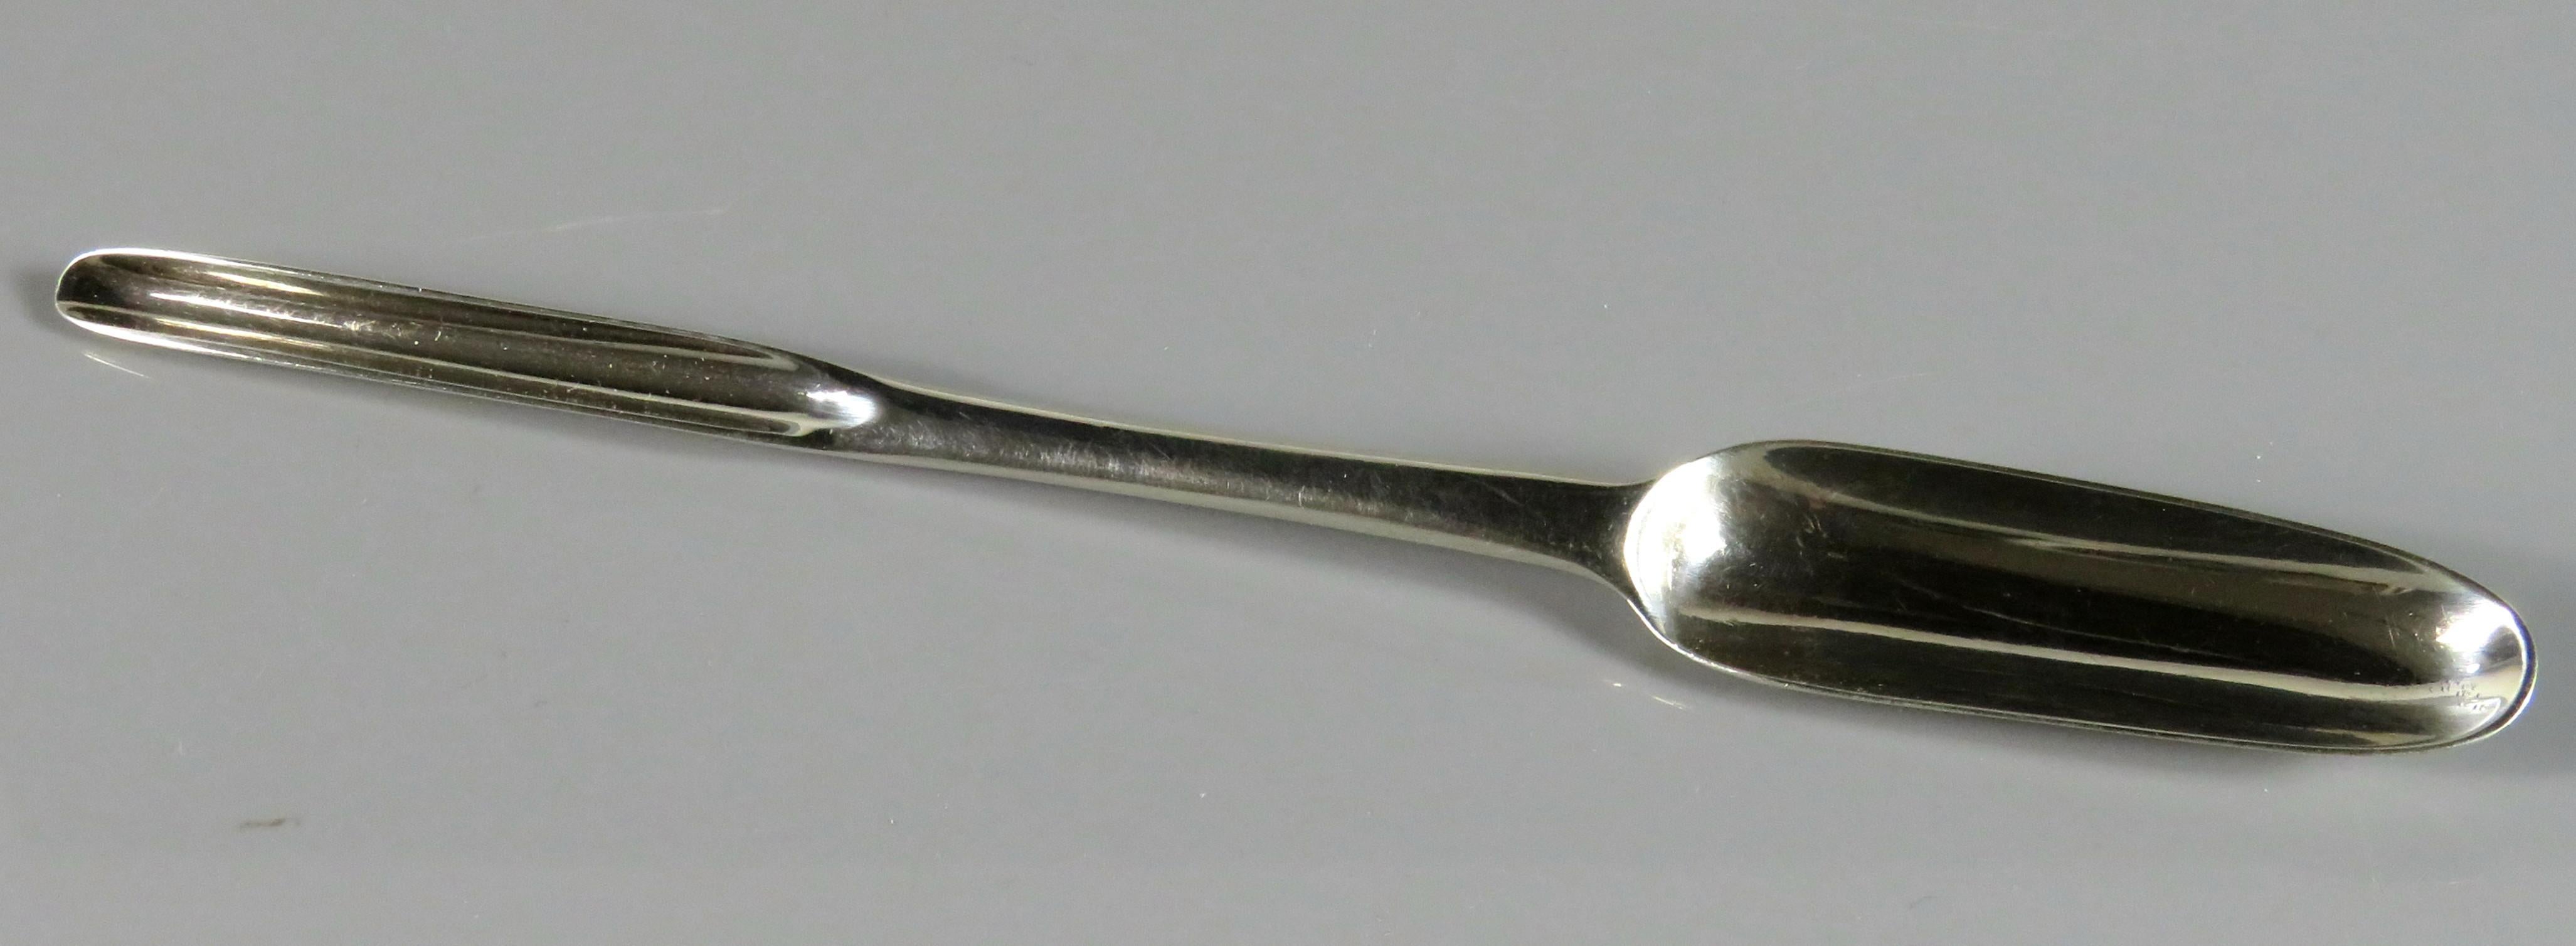 marrow spoon for sale